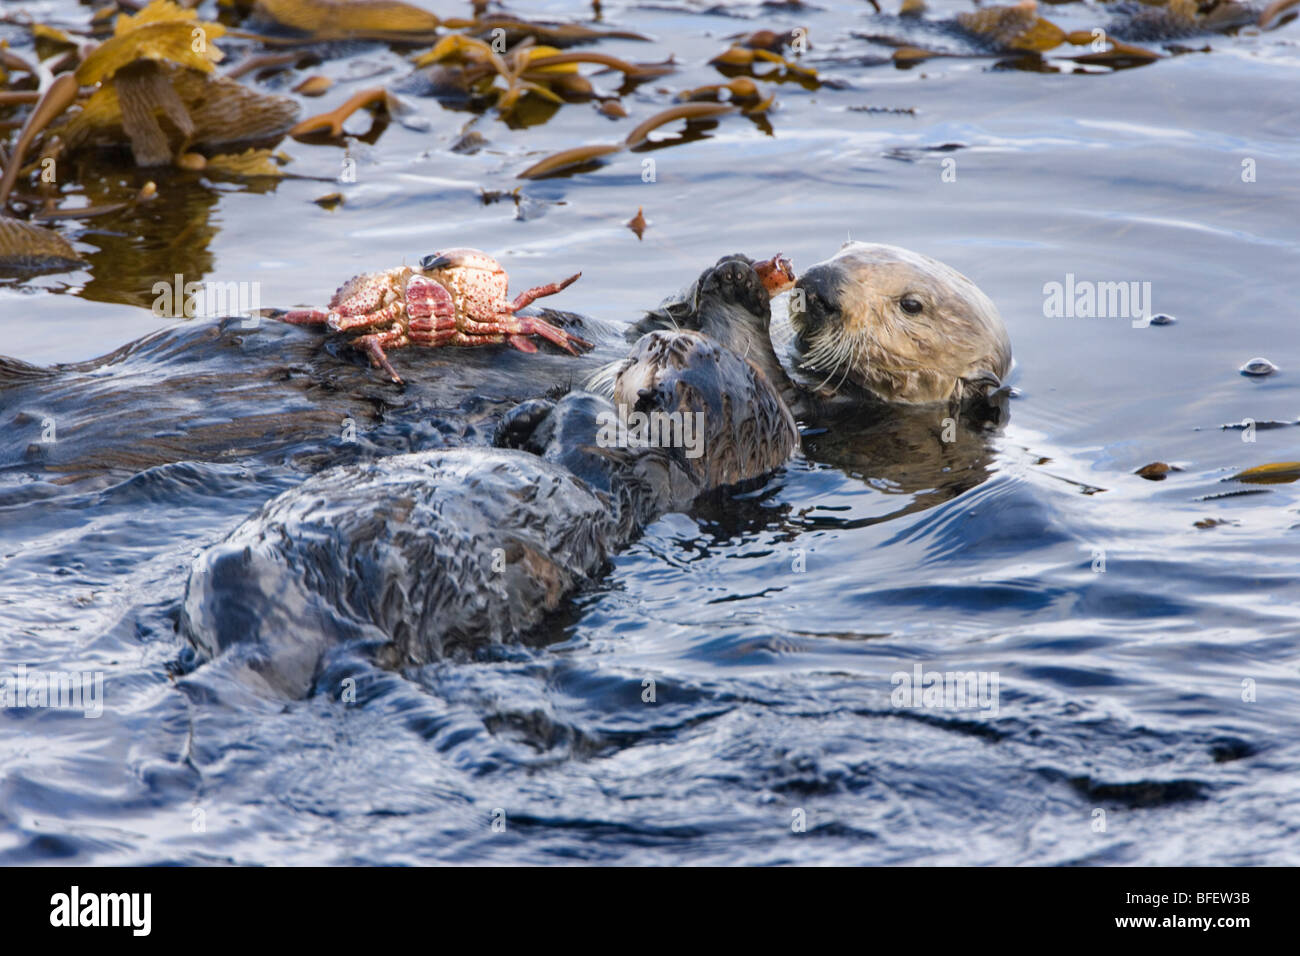 California sea otter (Enhydra lutris nereis), female and pup eating Red rock crab, Monterey Bay, California, USA Stock Photo